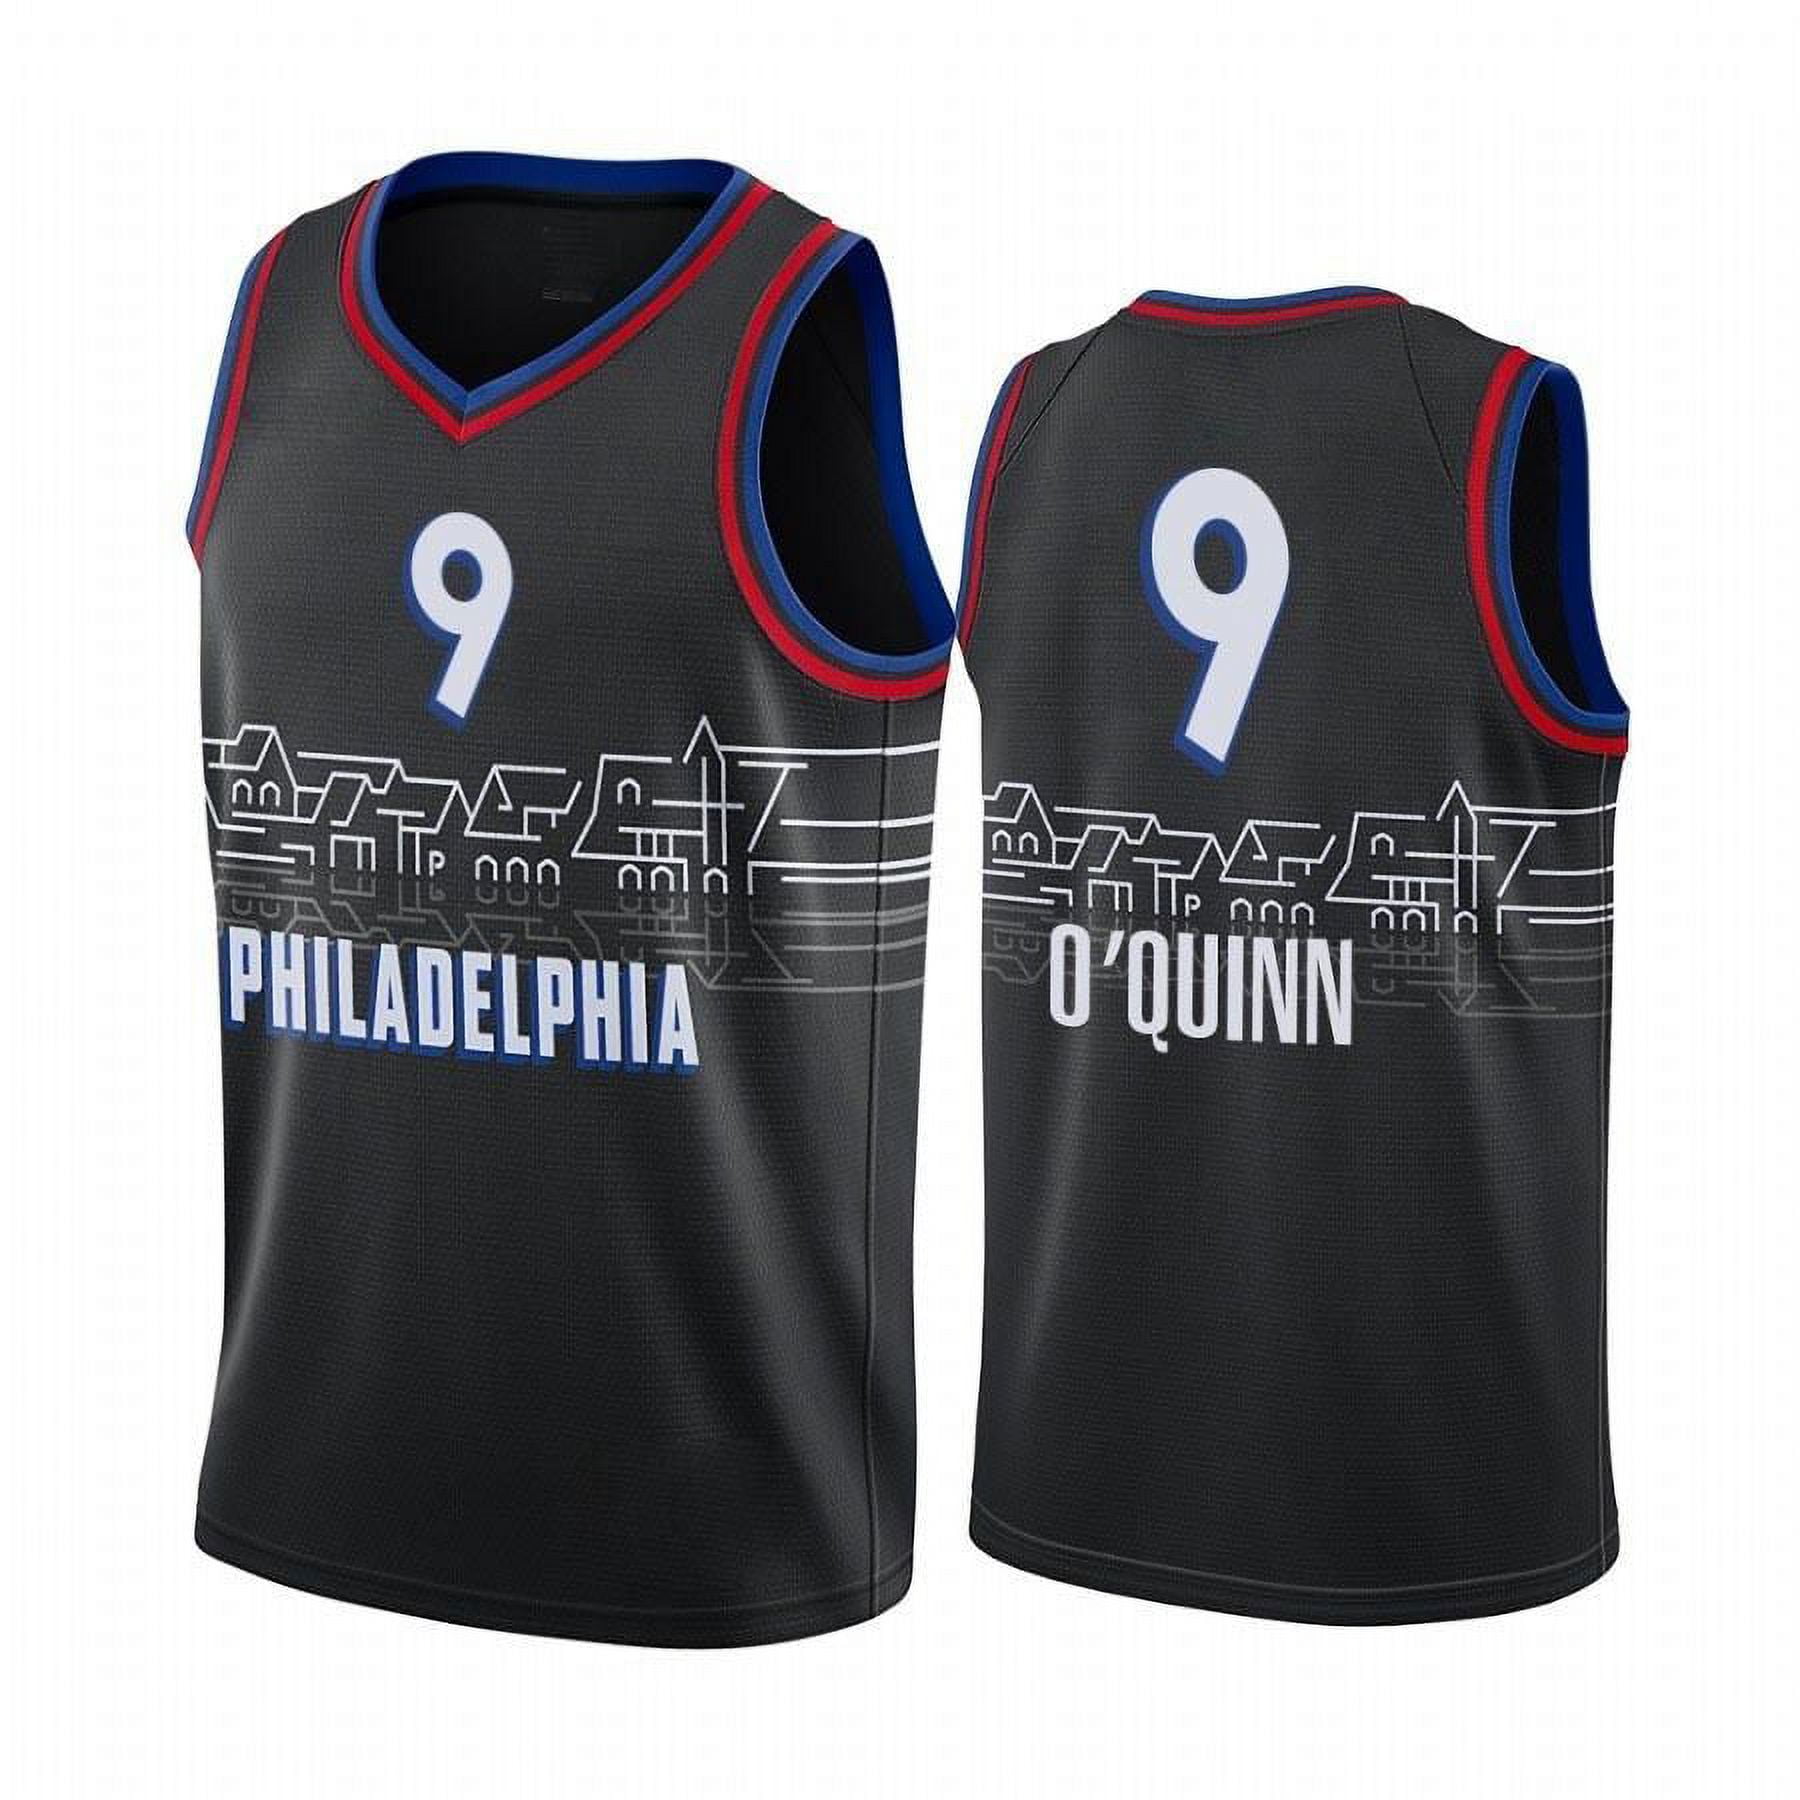 NBA_ Jersey Philadelphia 76ers''Men Kyle O'Quinn Joel Embiid Ben Simmons  Allen Iverson City Boathouse Row Jersey 